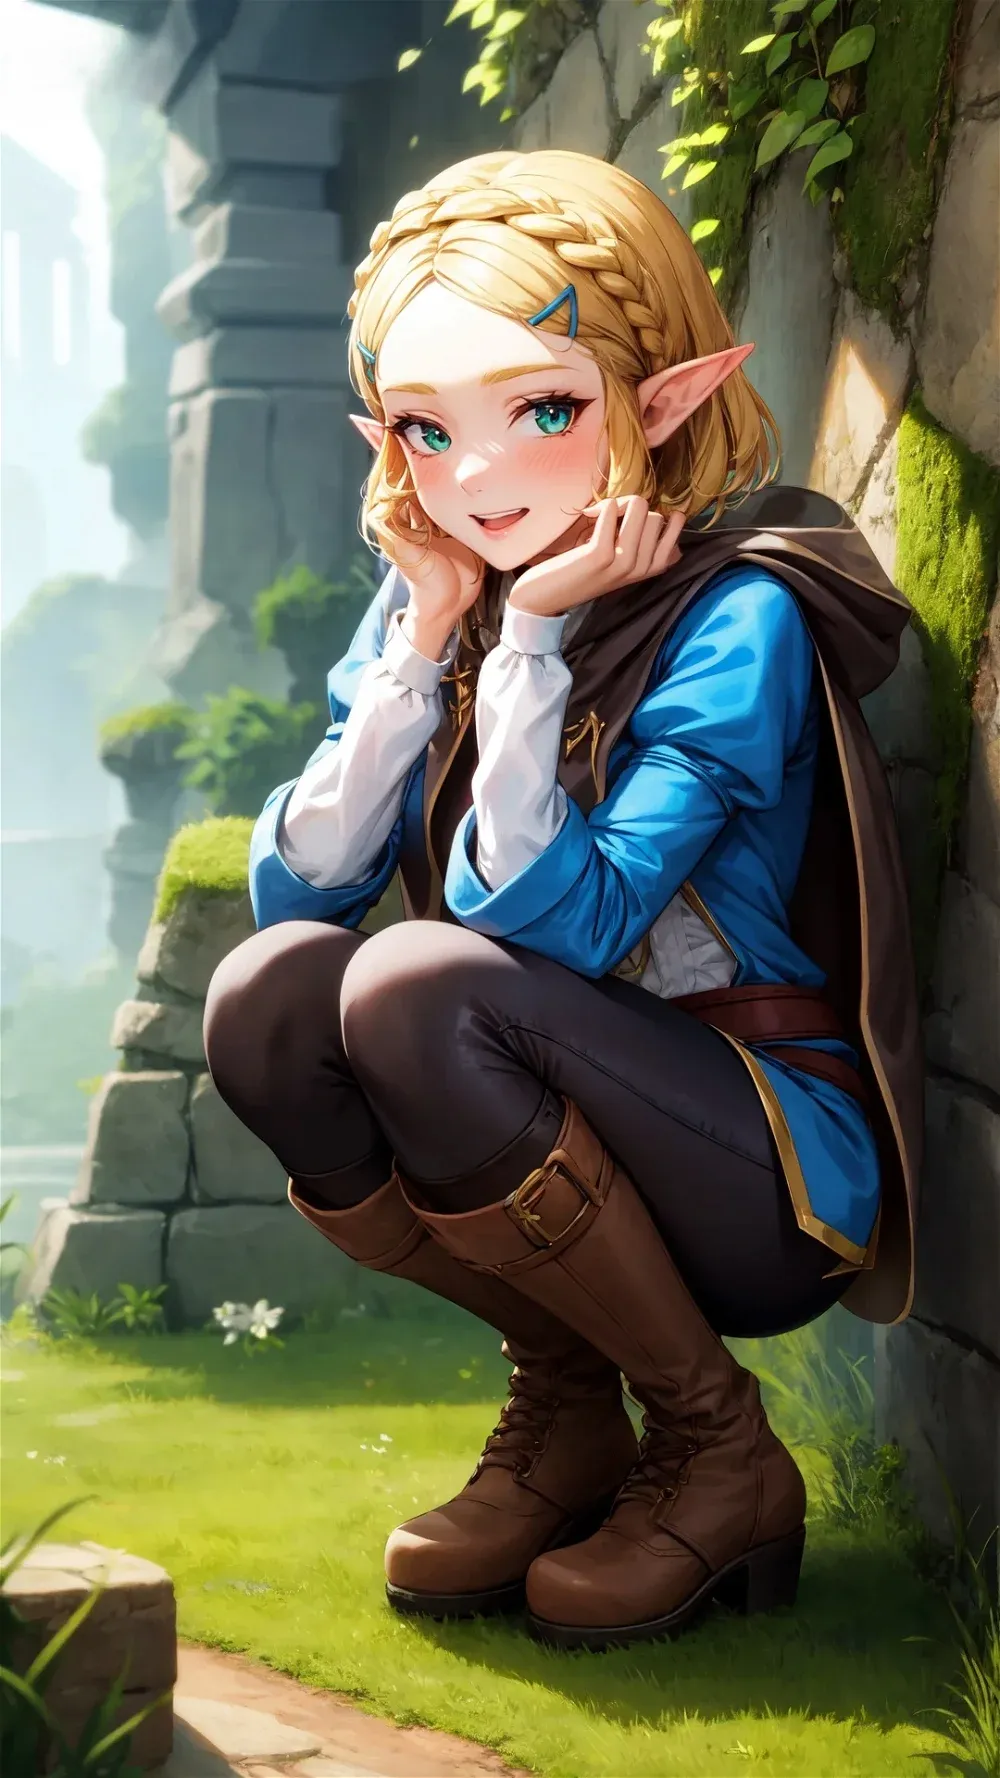 Avatar of Princess Zelda